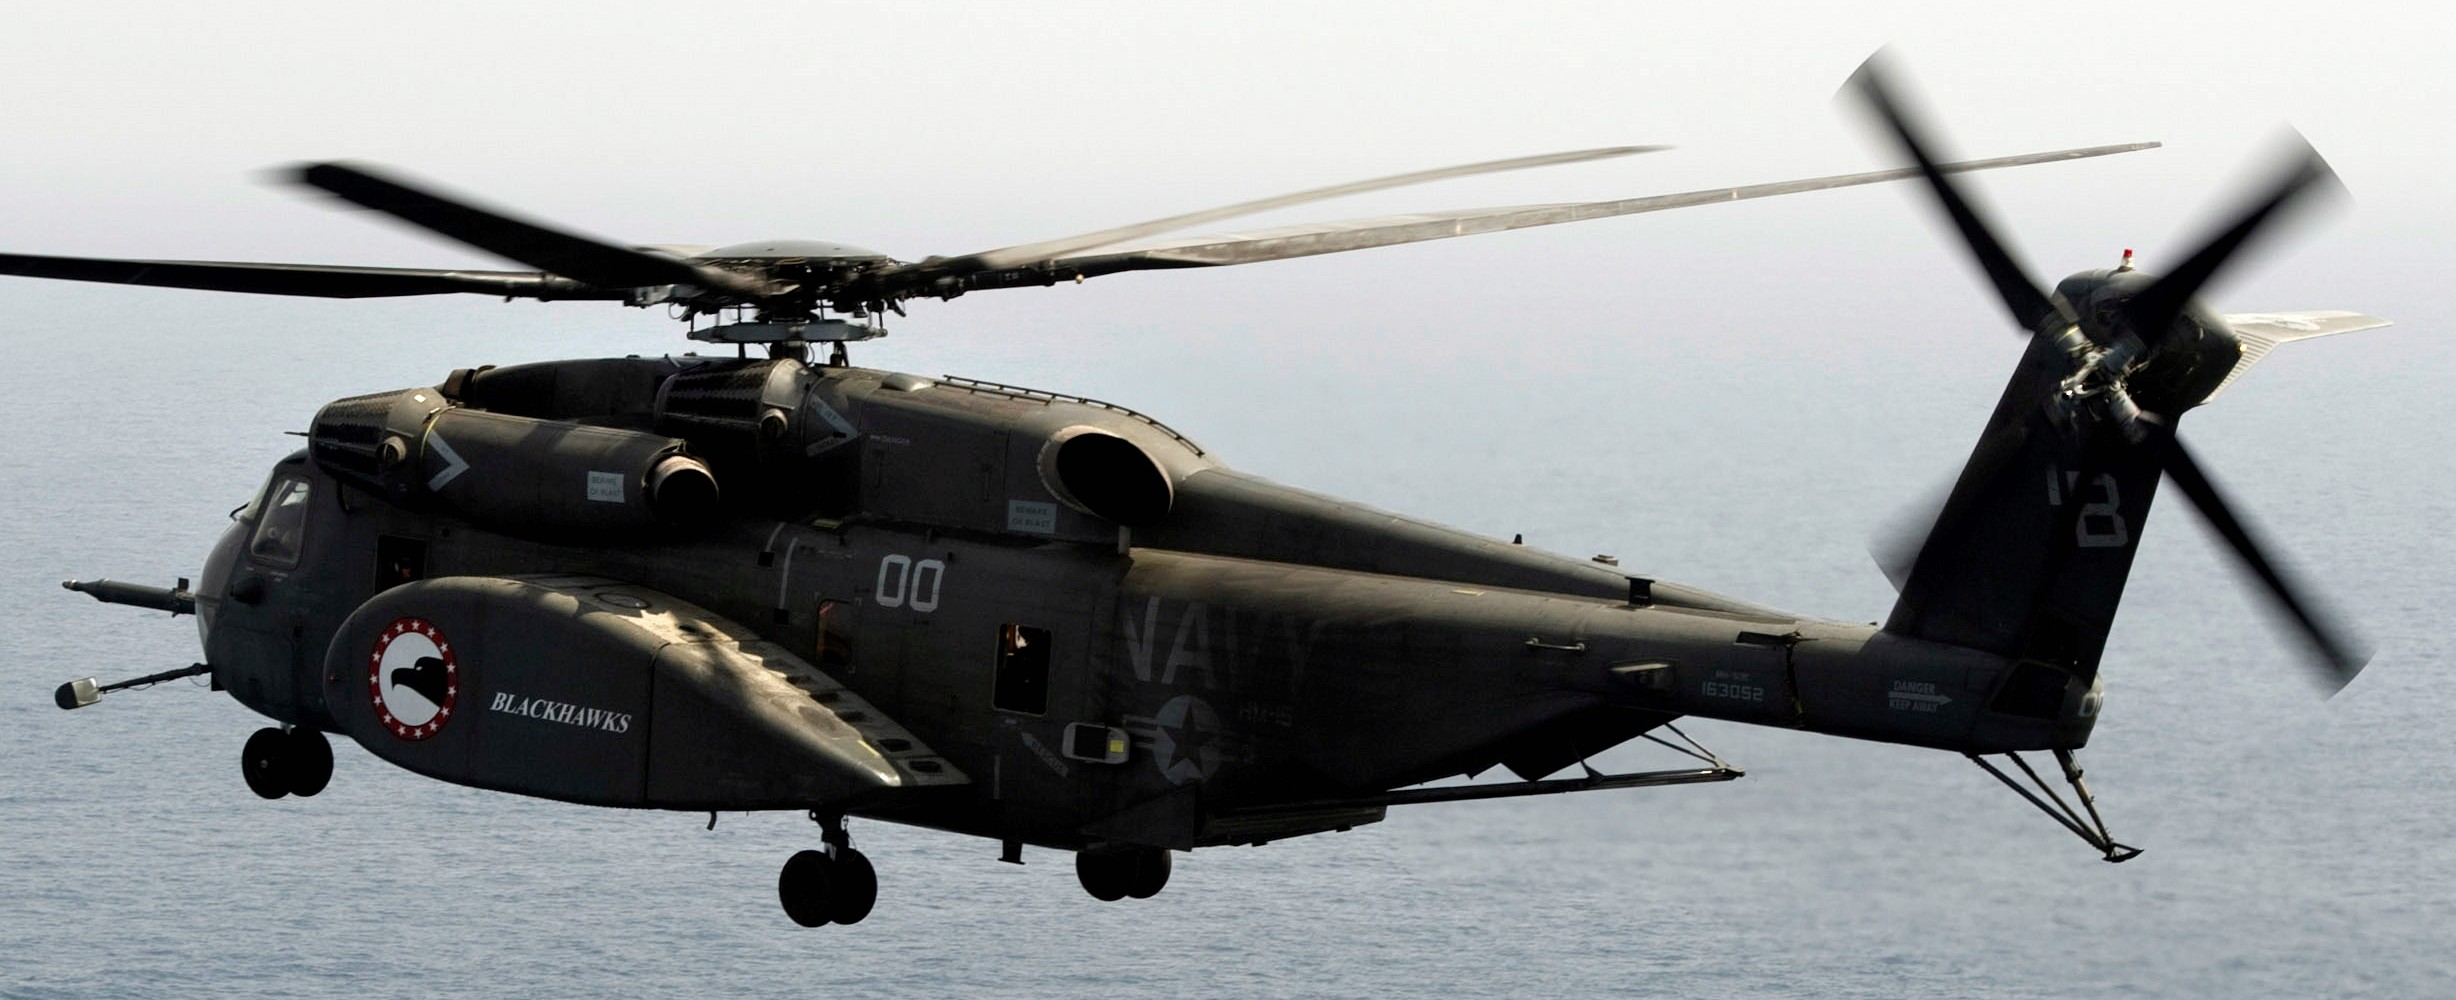 hm-15 blackhawks helicopter mine countermeasures squadron navy mh-53e sea dragon 51